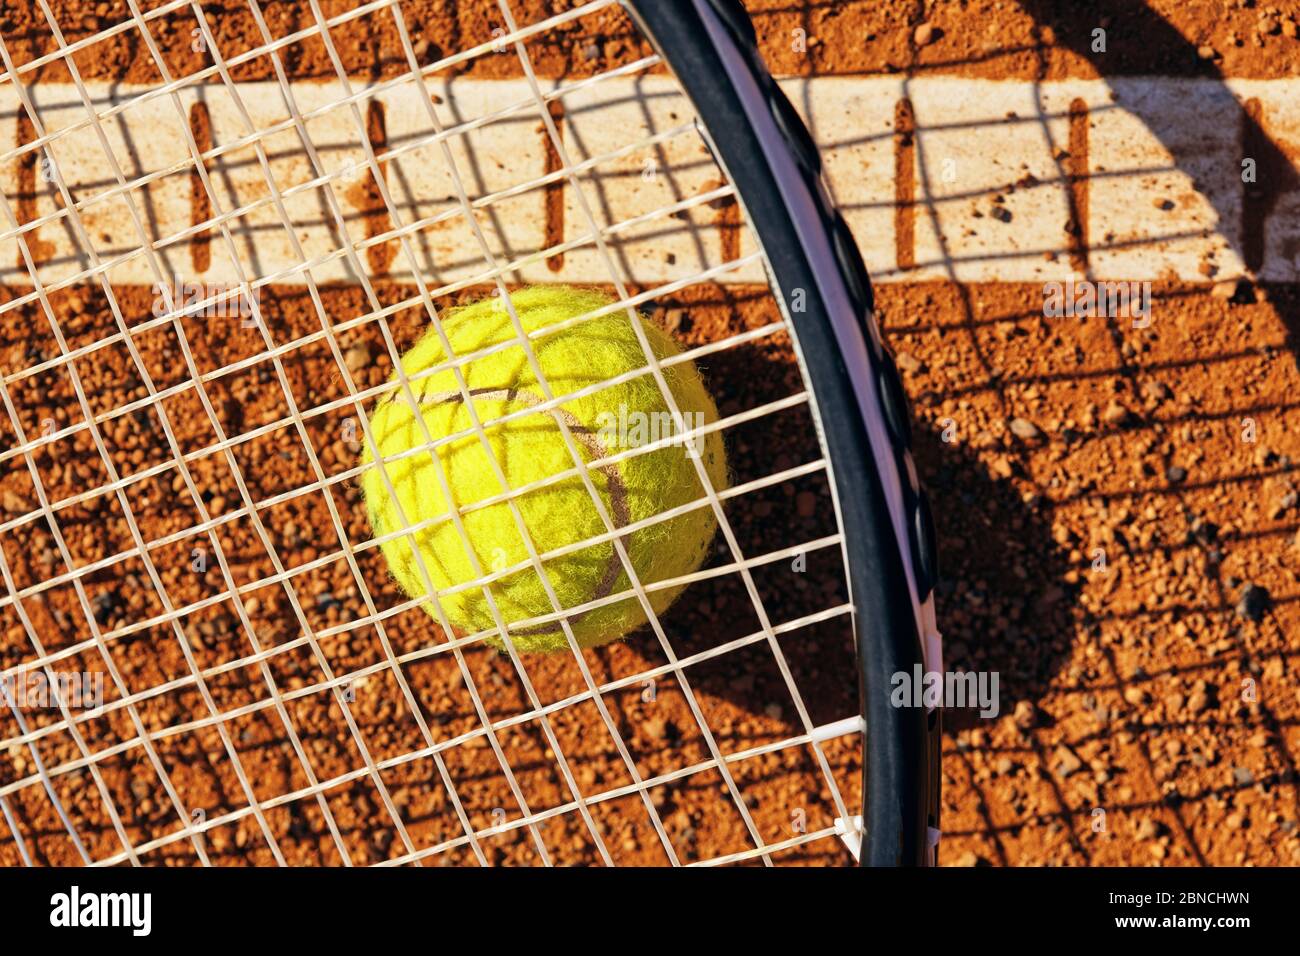 tennis ball on a tennis court Stock Photo